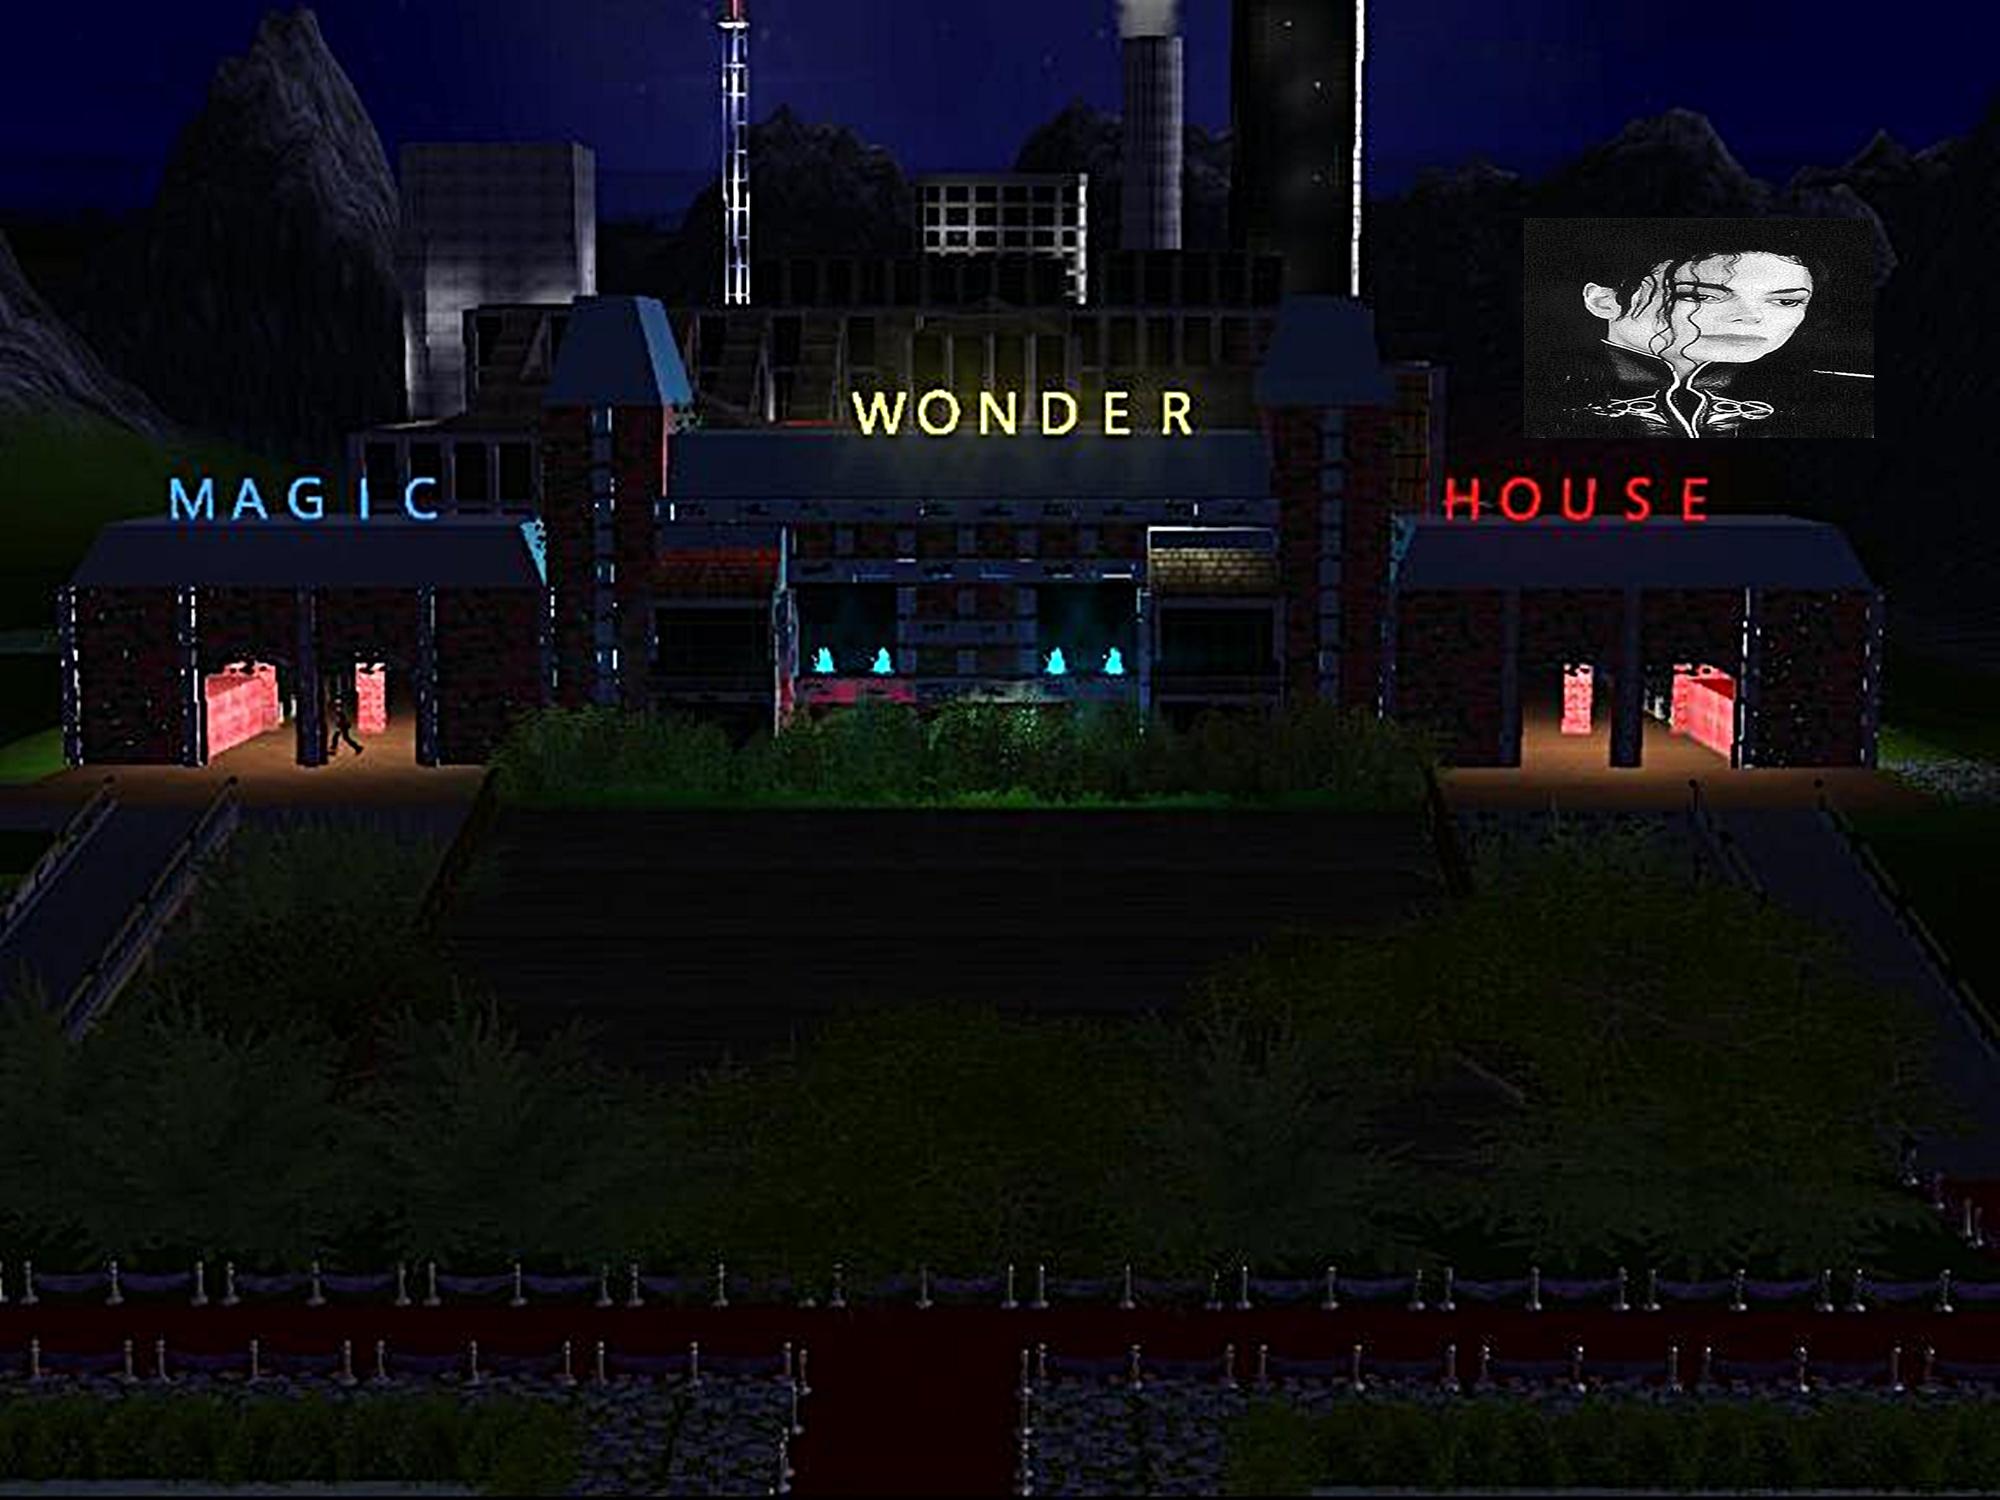 Magic Wonder House